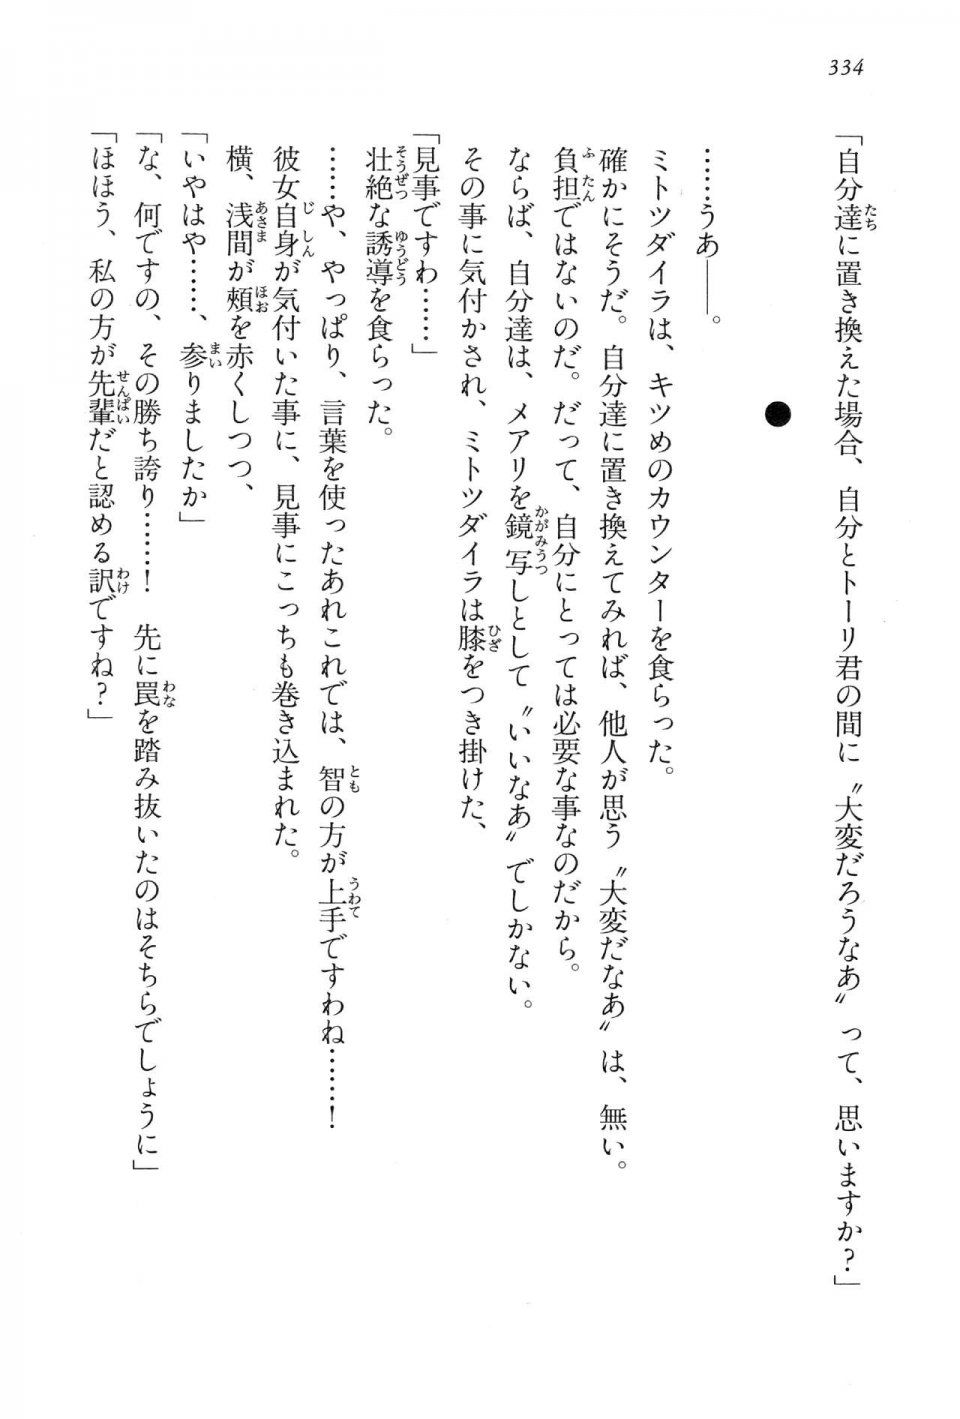 Kyoukai Senjou no Horizon LN Vol 15(6C) Part 1 - Photo #334